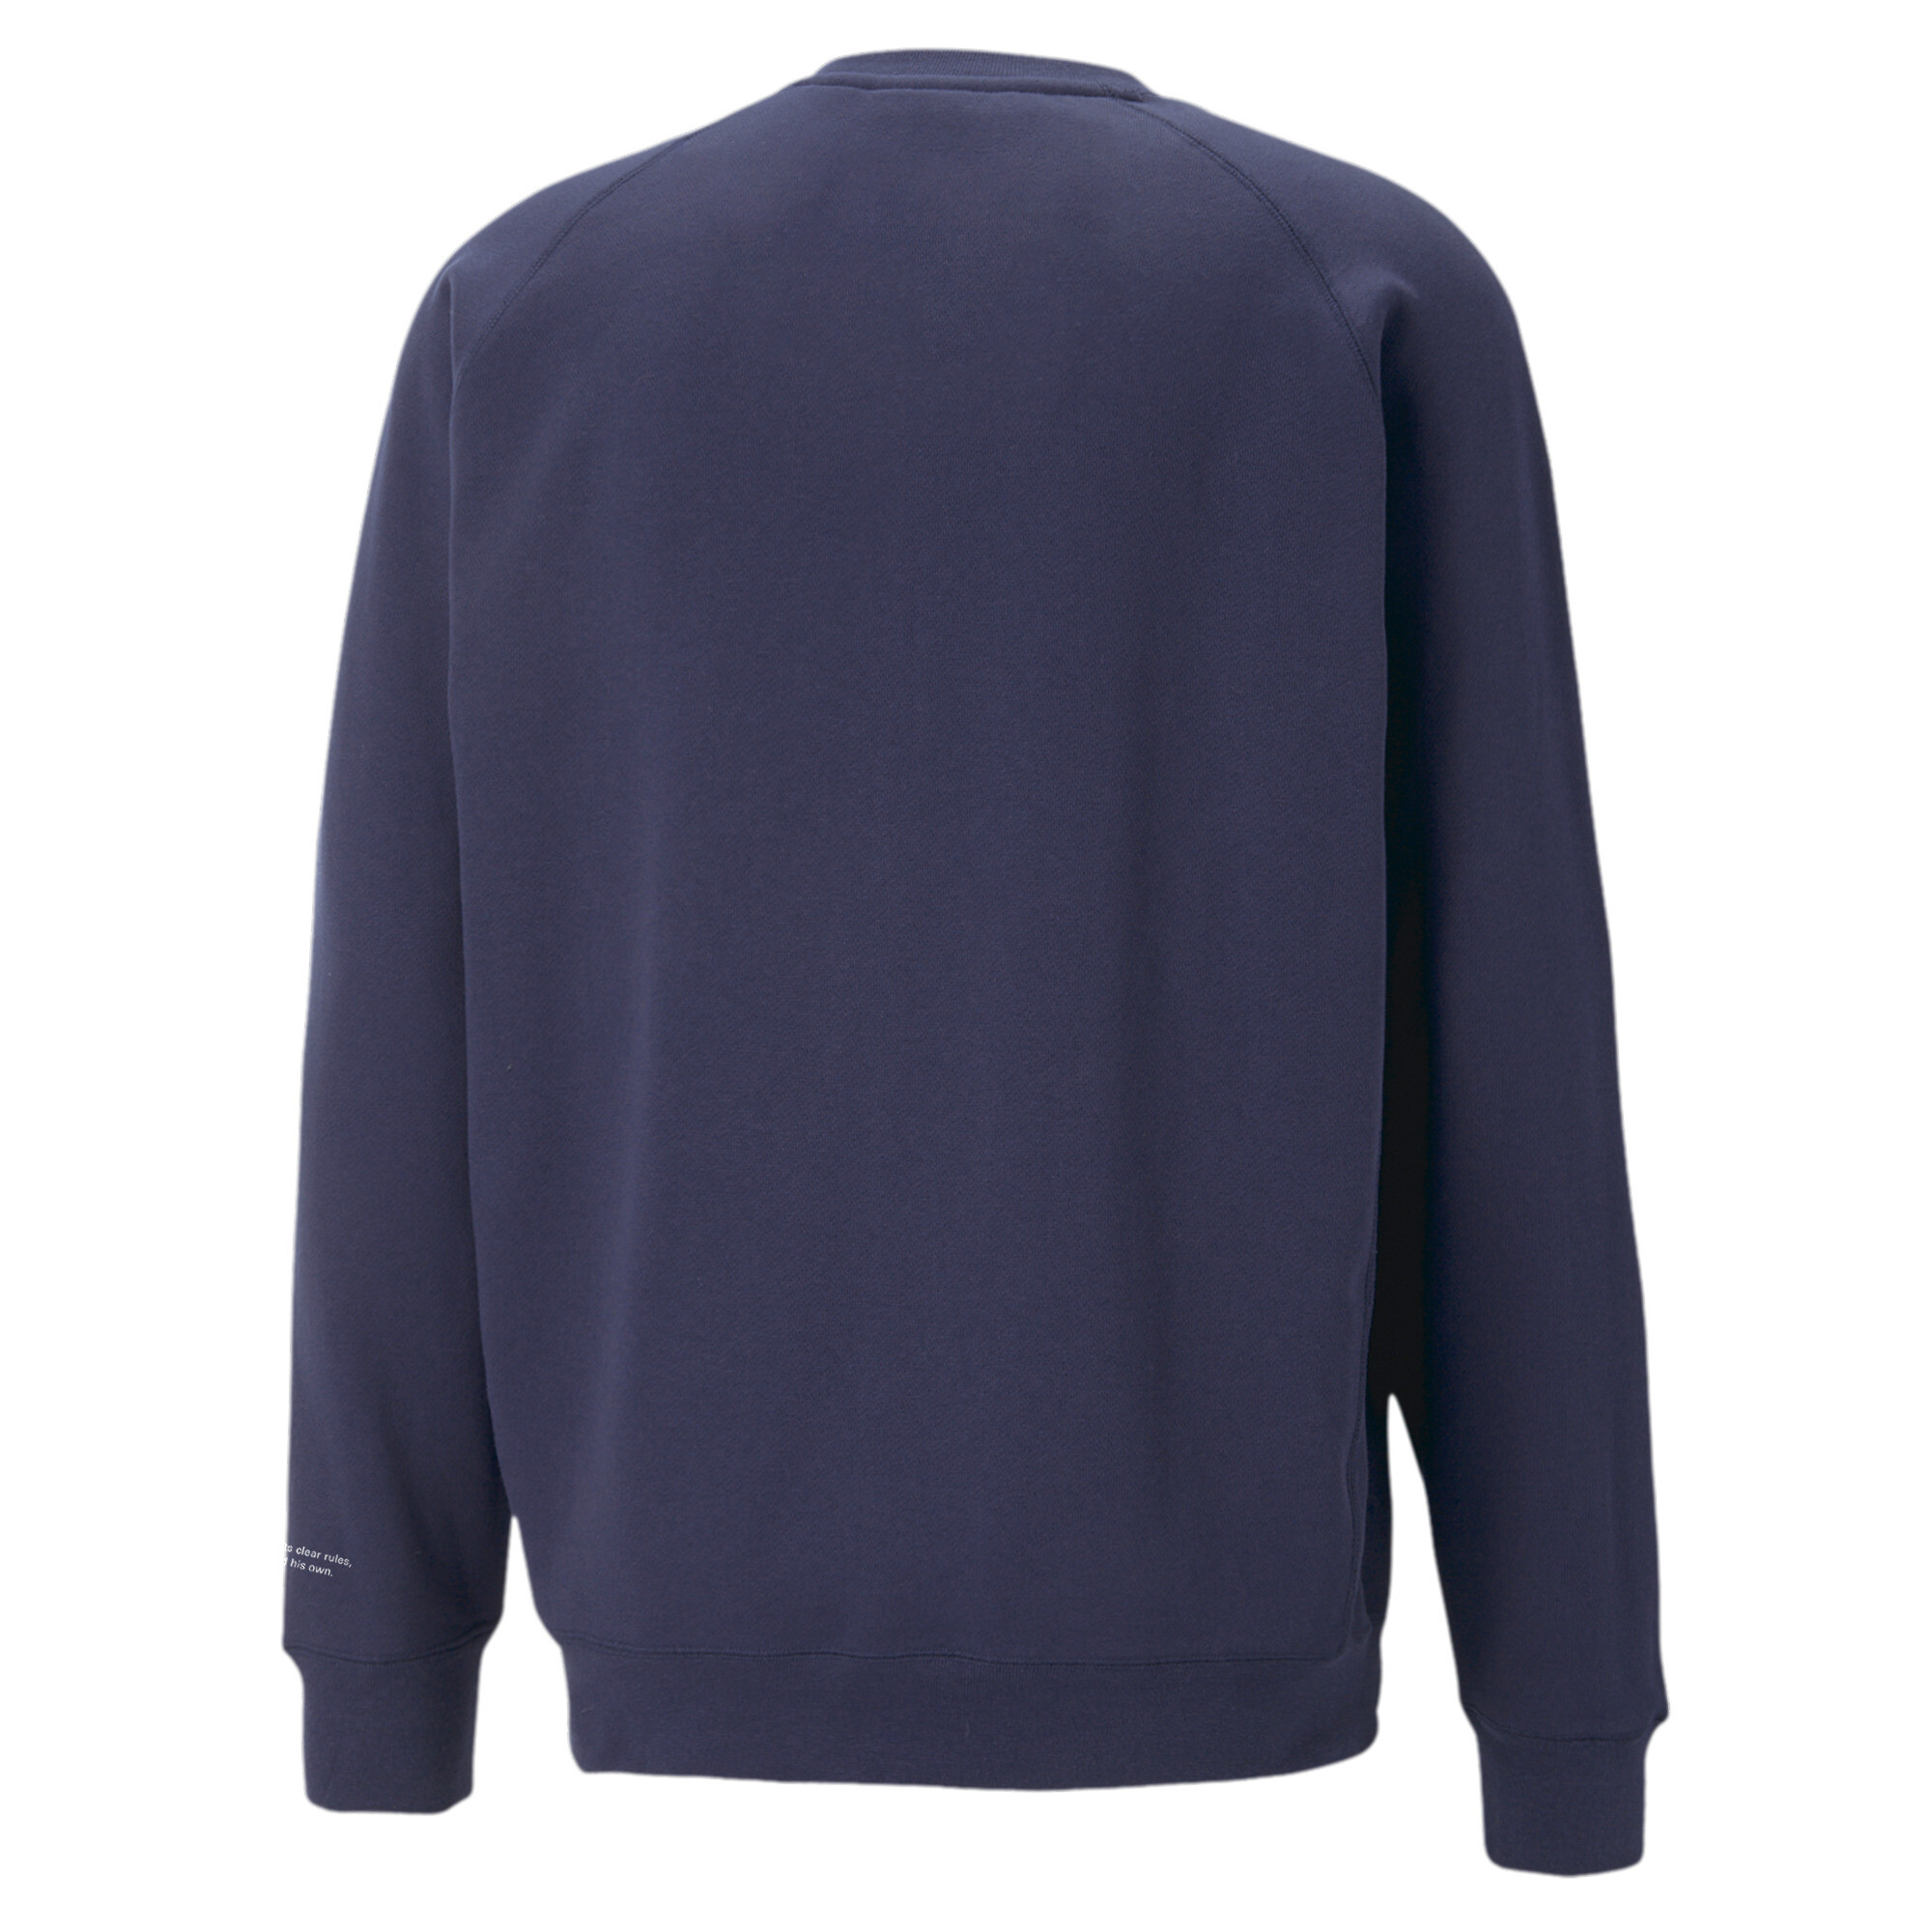 Men's PUMA MMQ Graphic Crewneck Sweatshirt Men In Blue, Size Medium